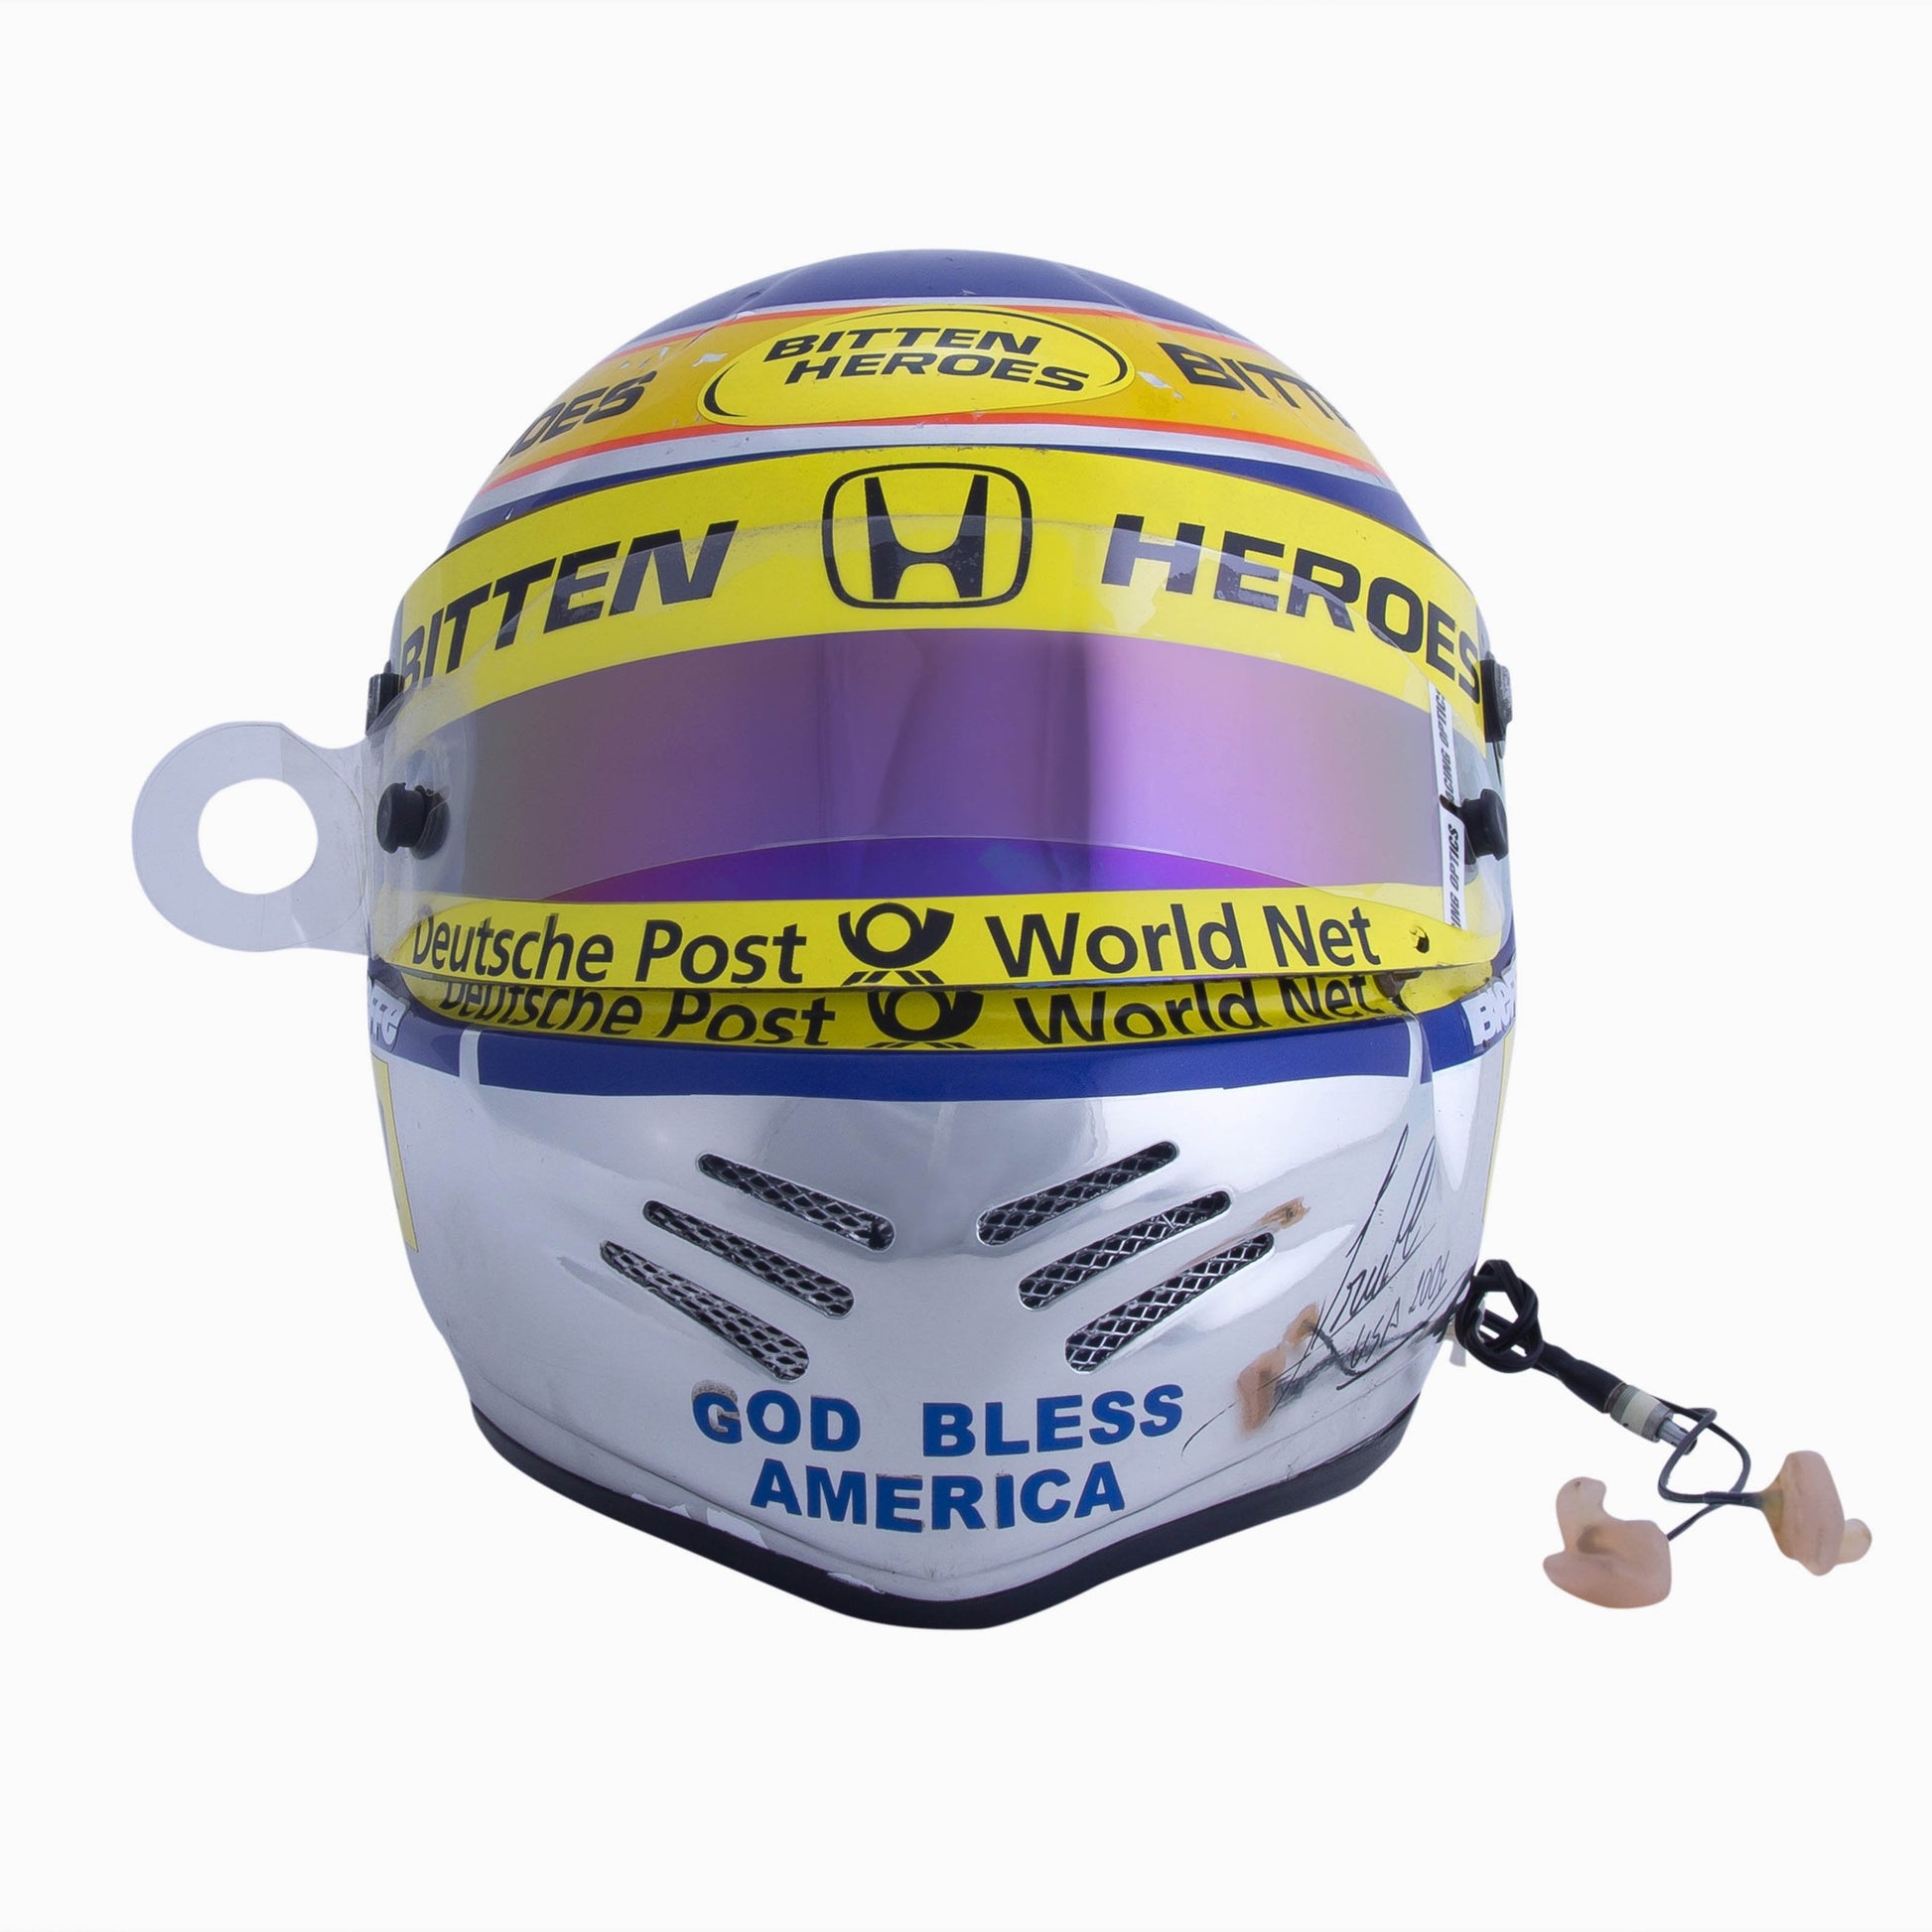 Jarno Trulli 2001 Signed Helmet-GPX Store-GPX Store